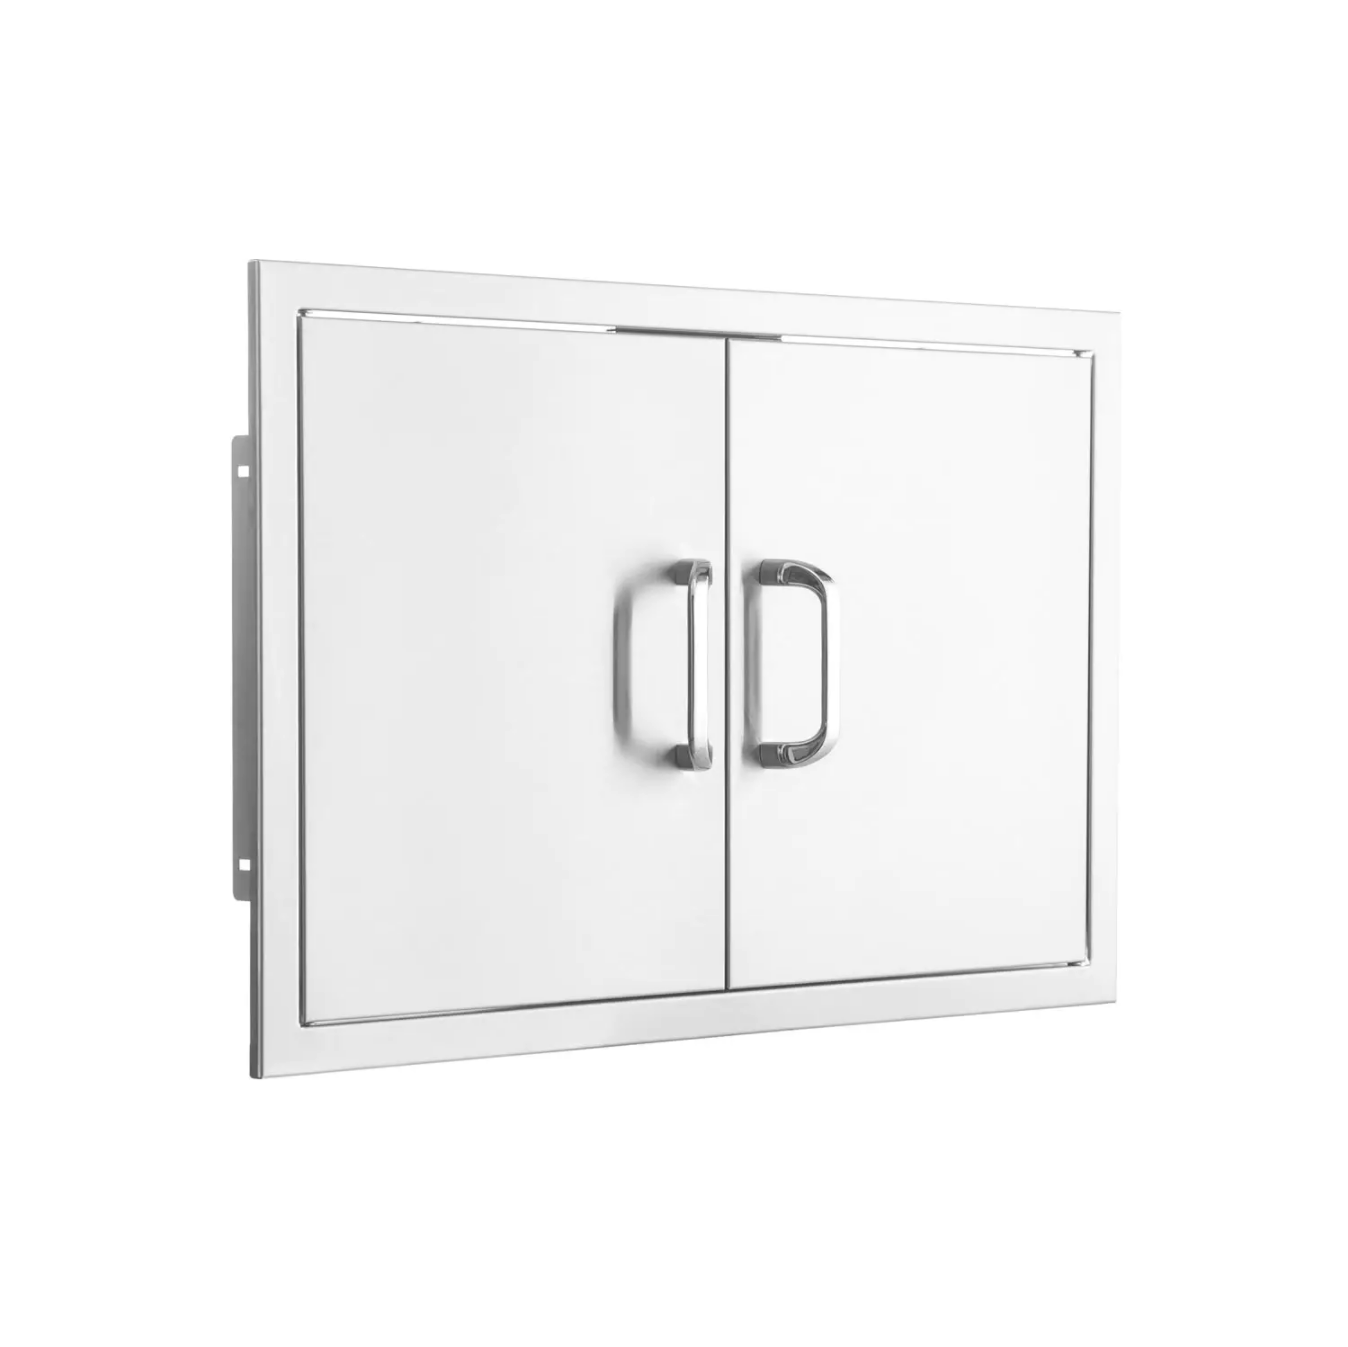 PCM 260 Series 25" Stainless Steel Double Access Door